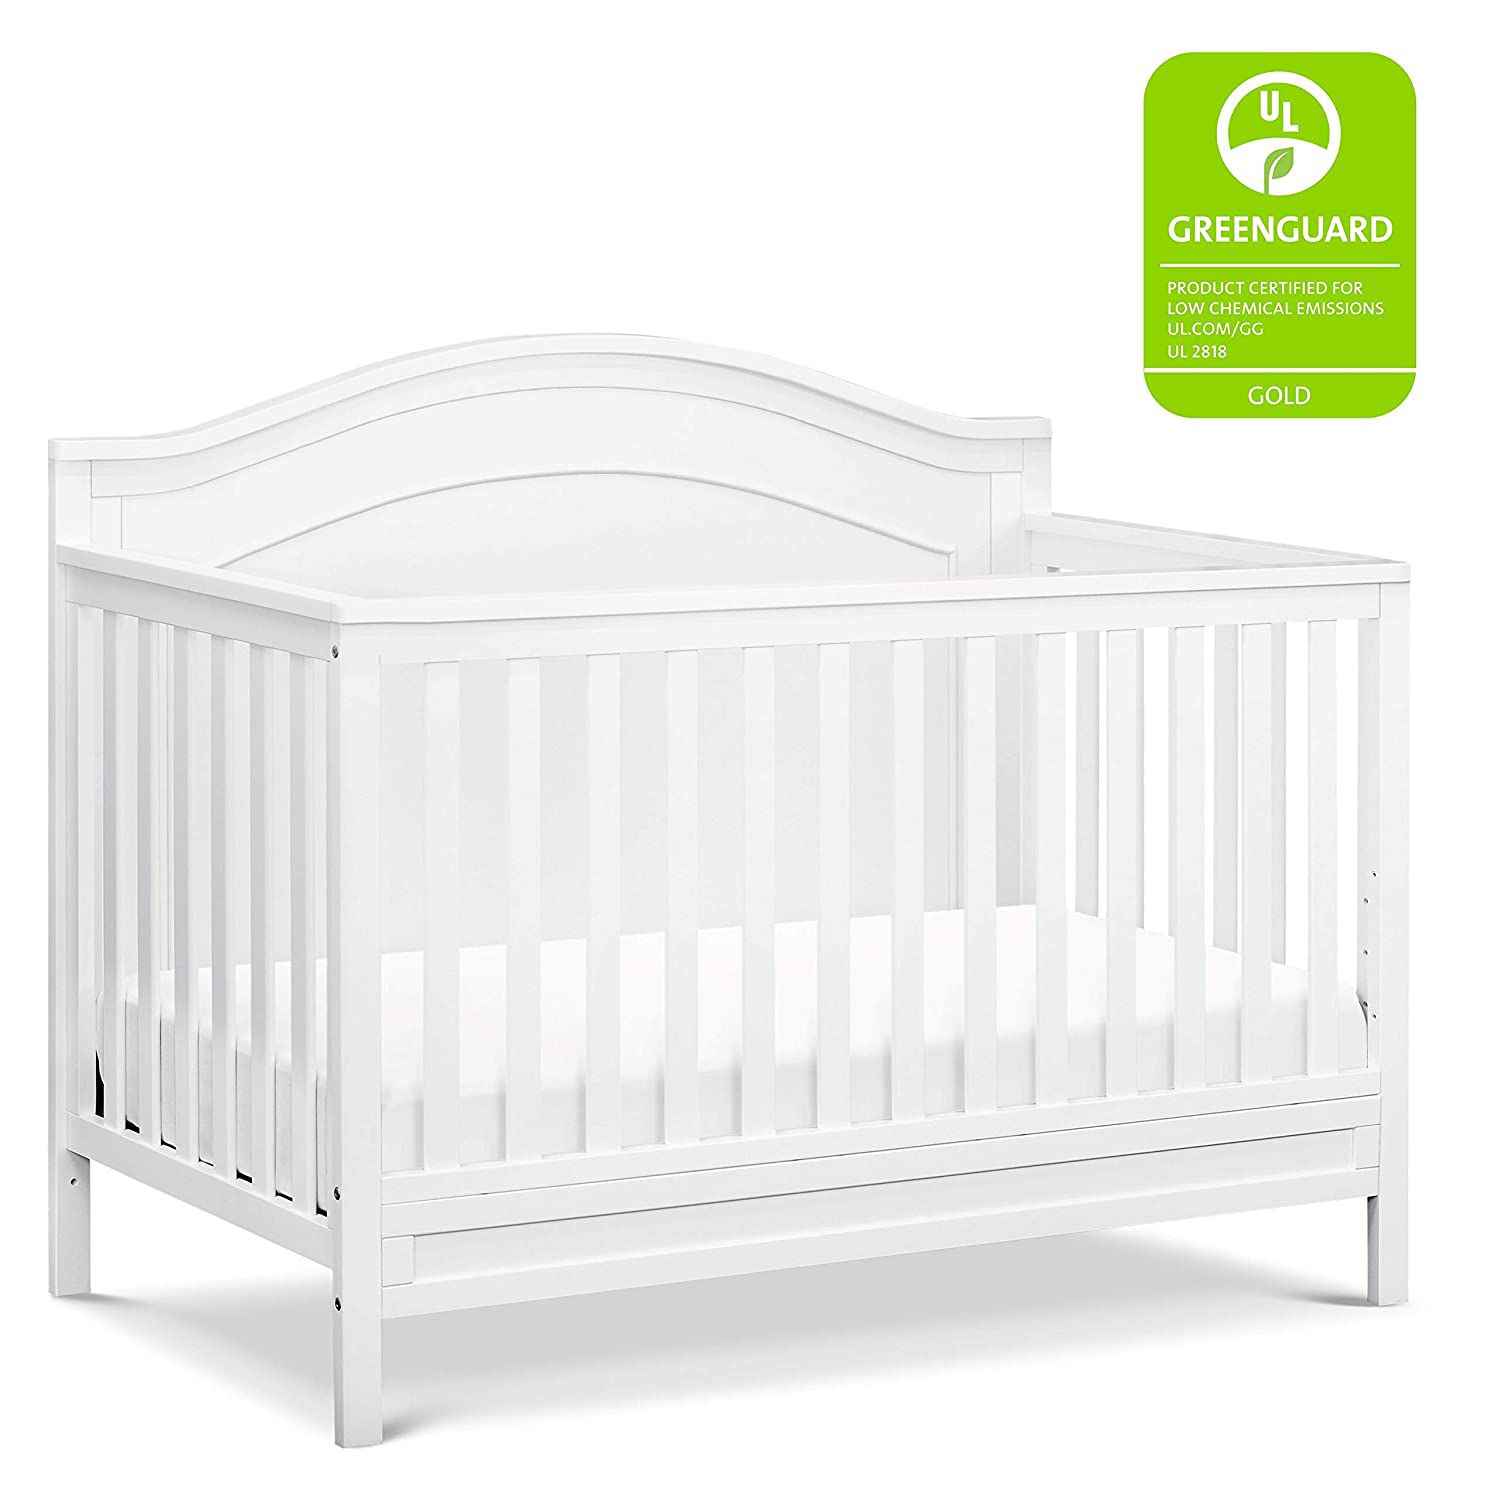 NEW IN BOX - DaVinci Charlie 4-in-1 Convertible Crib in White, Greenguard Gold Certified